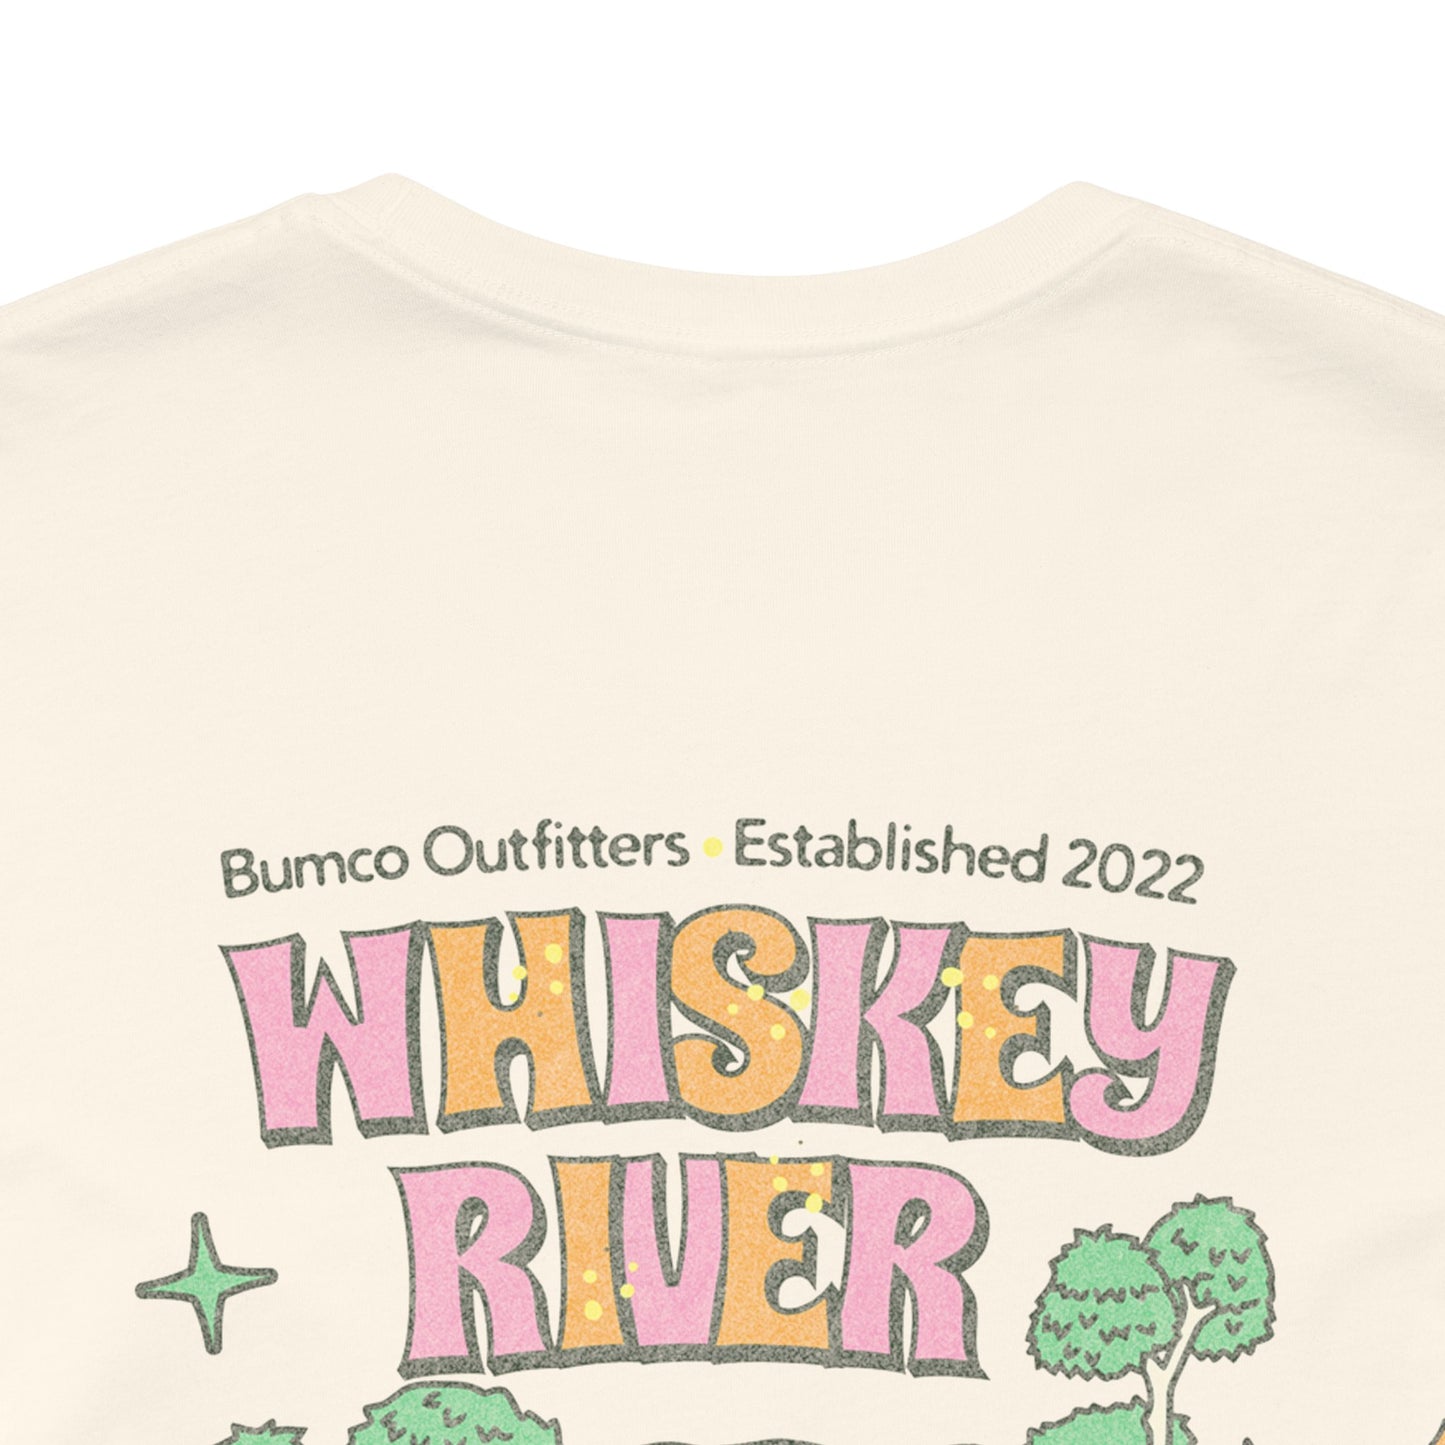 Whiskey River - T-Shirt